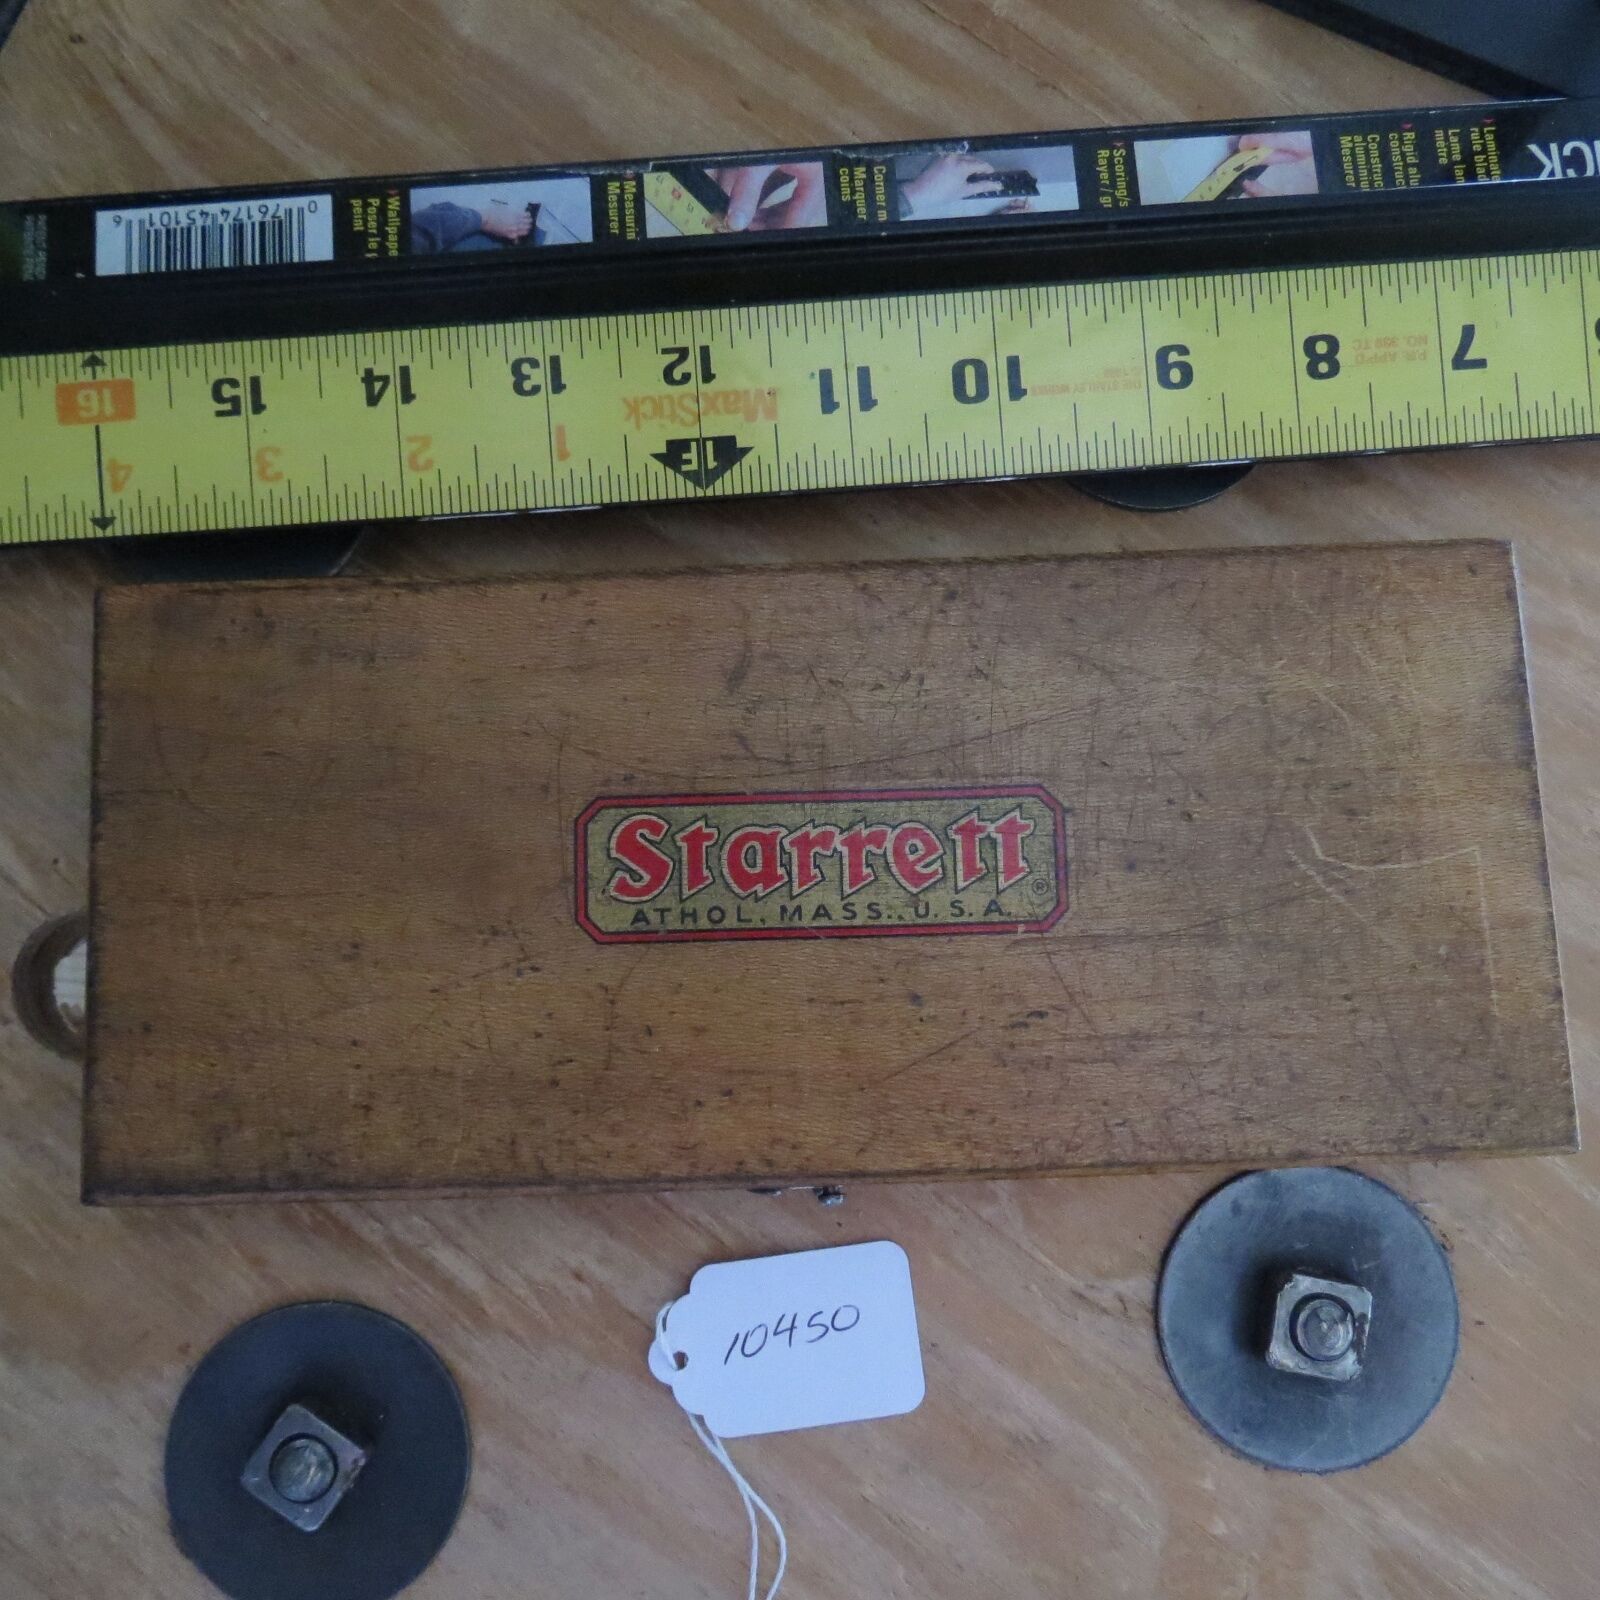 Vintage Starrett Athol Mass. USA measuring/Calibration tool? in box (lot#10450)